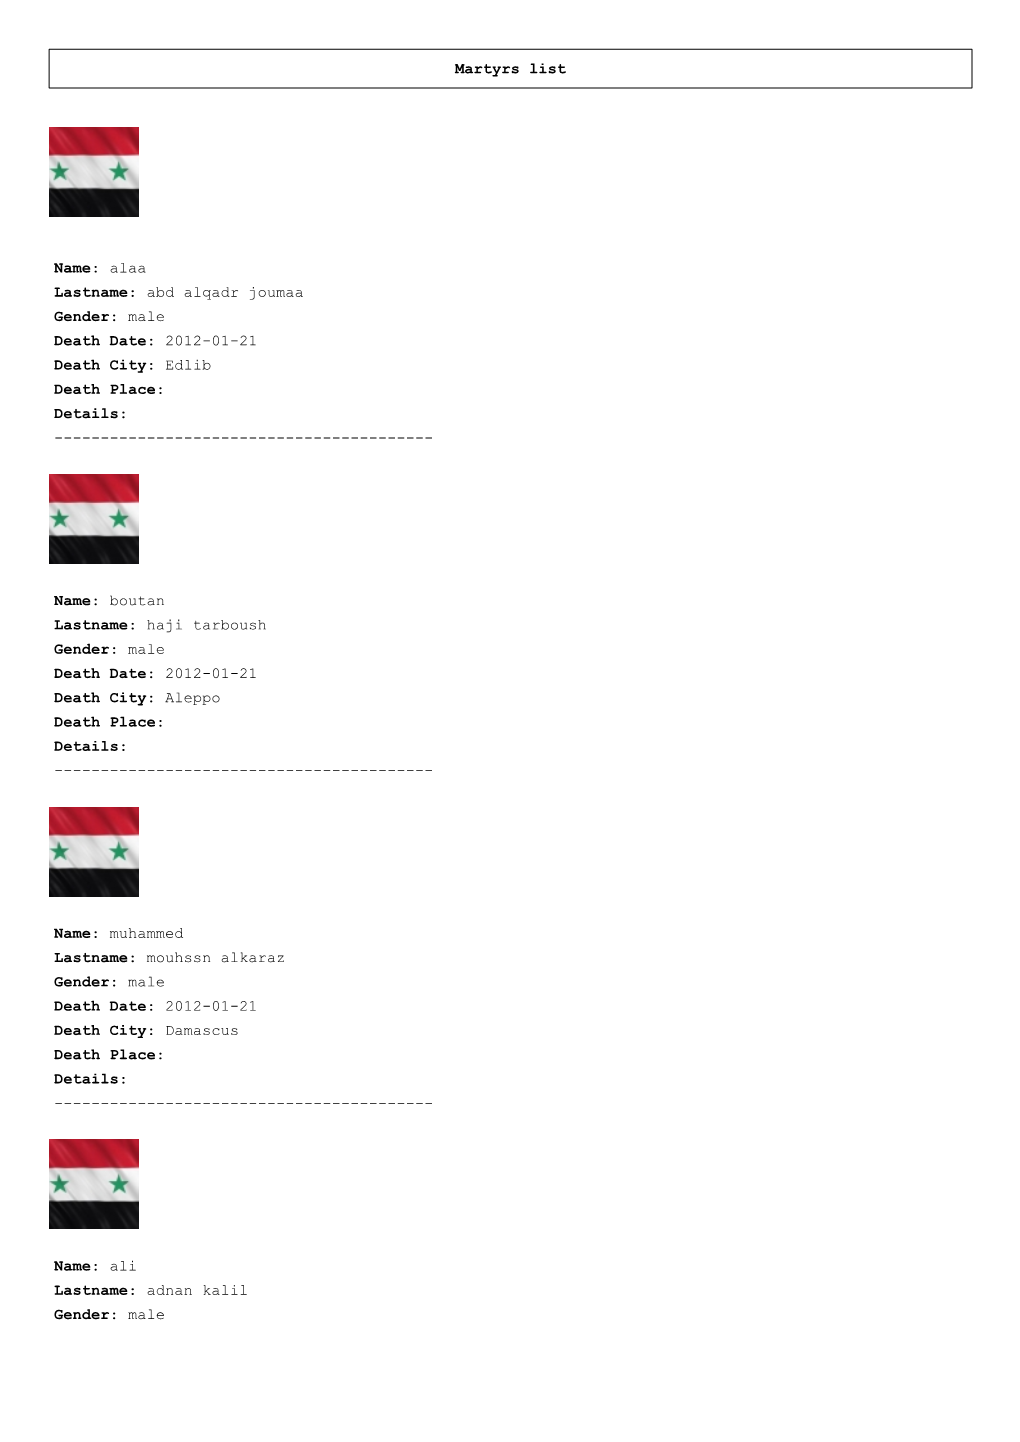 Martyrs List Name: Alaa Lastname: Abd Alqadr Joumaa Gender: Male Death Date: 2012-01-21 Death City: Edlib Death Place: Details